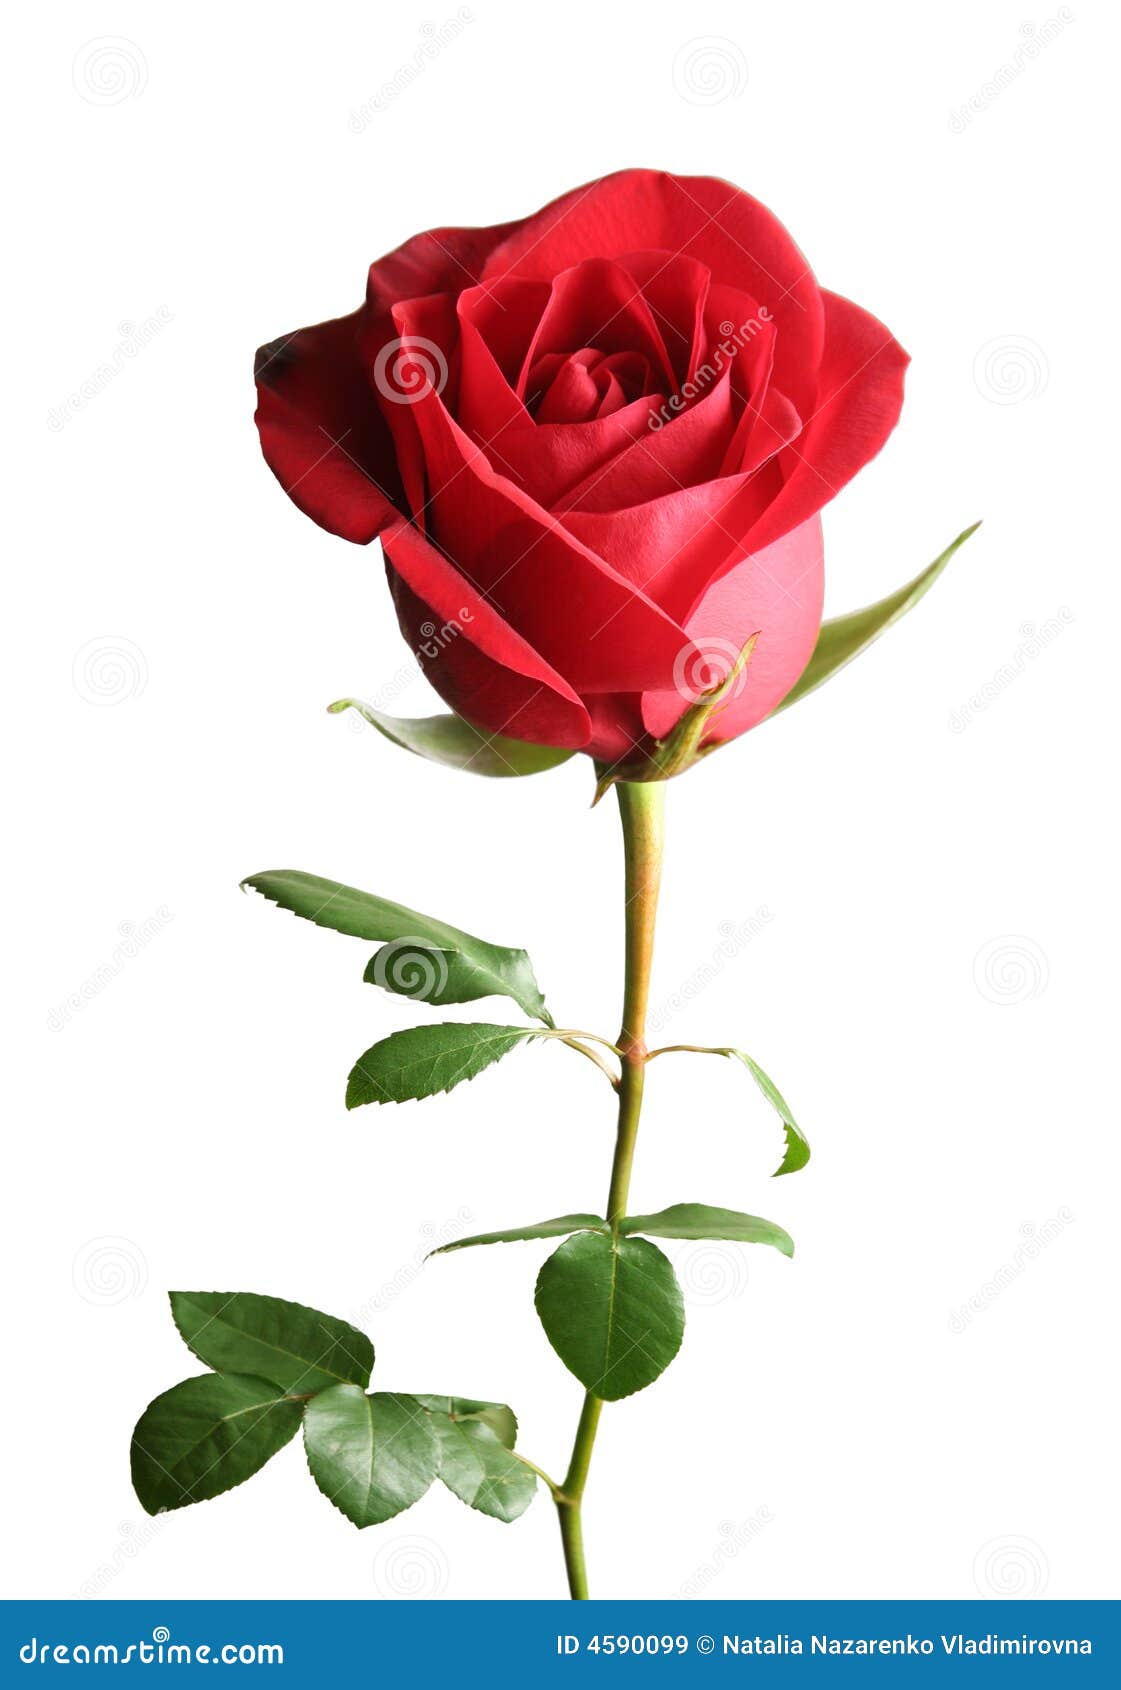 Red rose stock image. Image of closeup, anniversary, season - 4590099